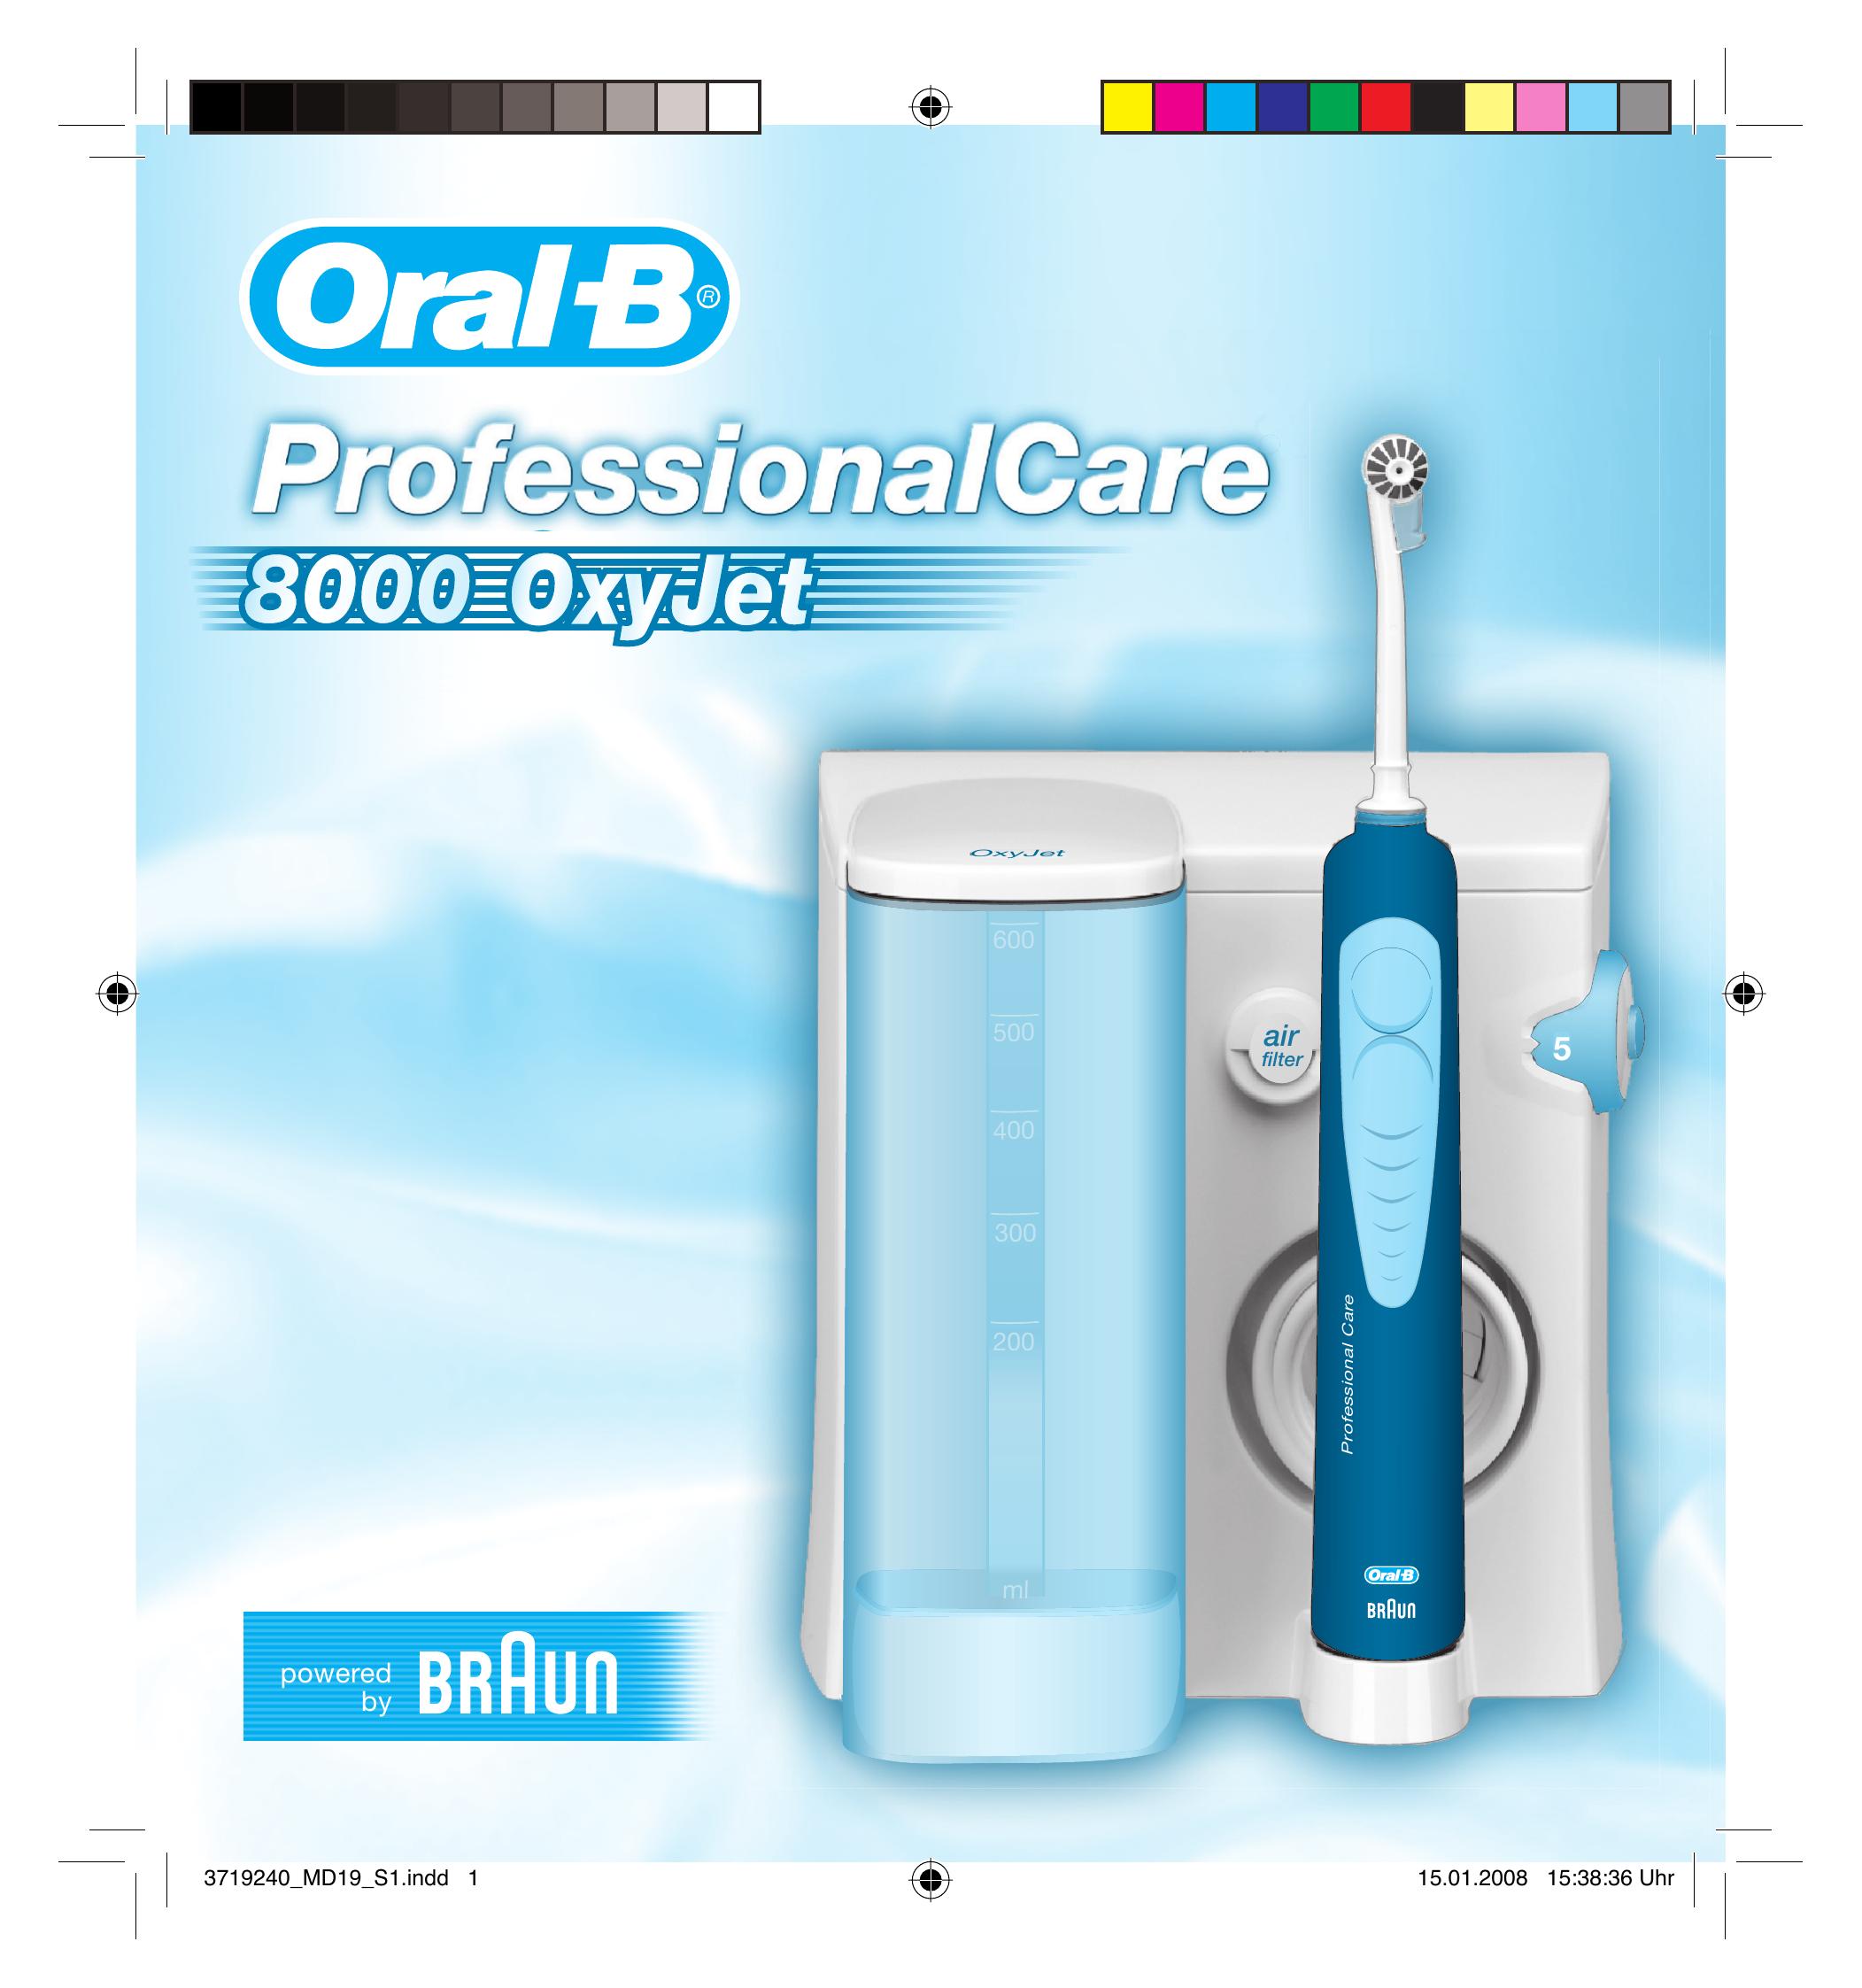 Braun 8000 OxyJet Electric Toothbrush User Manual